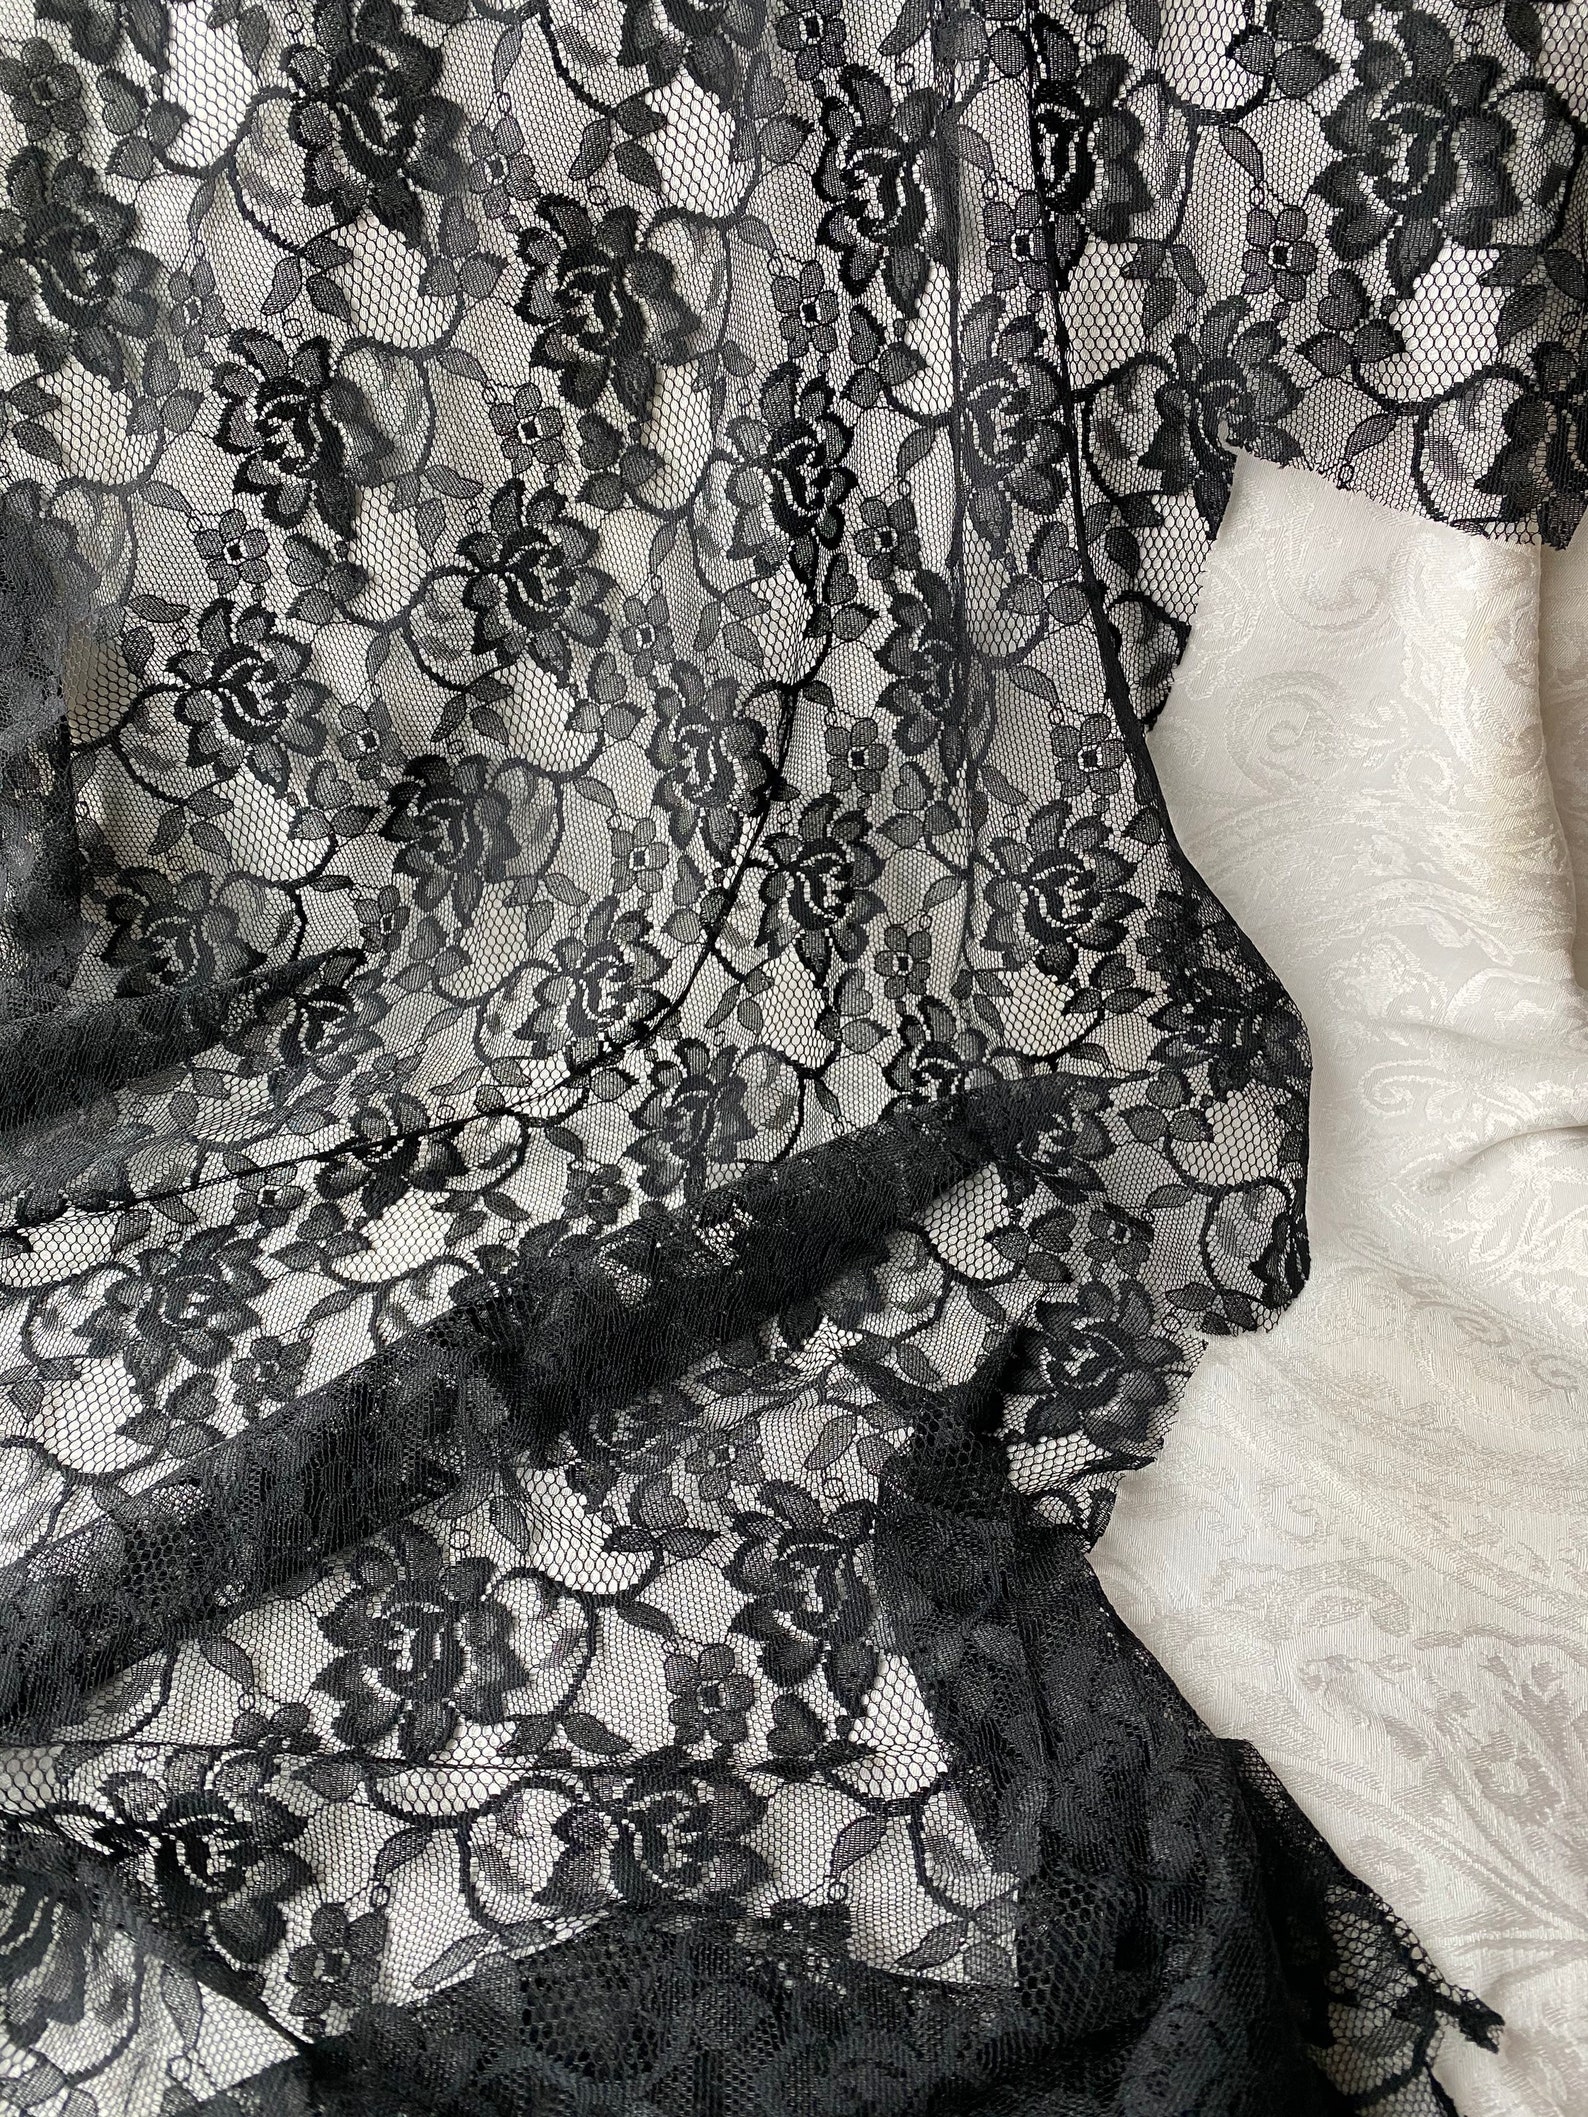 Black Satin Fabric Black Lace Remnants Black Chantilly Lace - Etsy